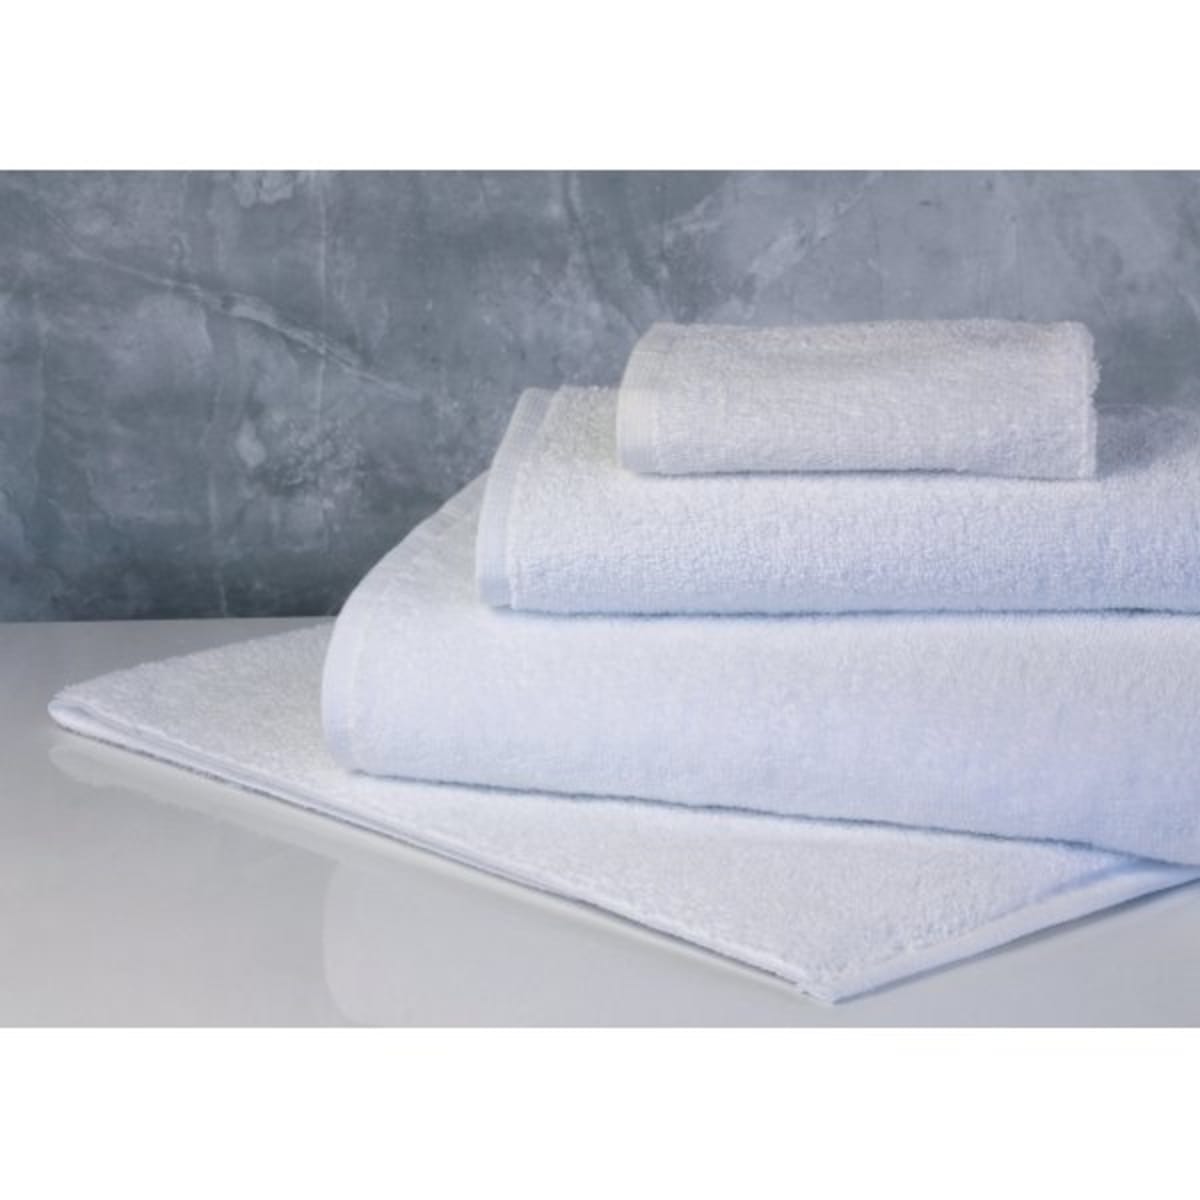 Sobel Westex Bath Towel Dobby Border For Red Lion Hotels, White Case Of 24